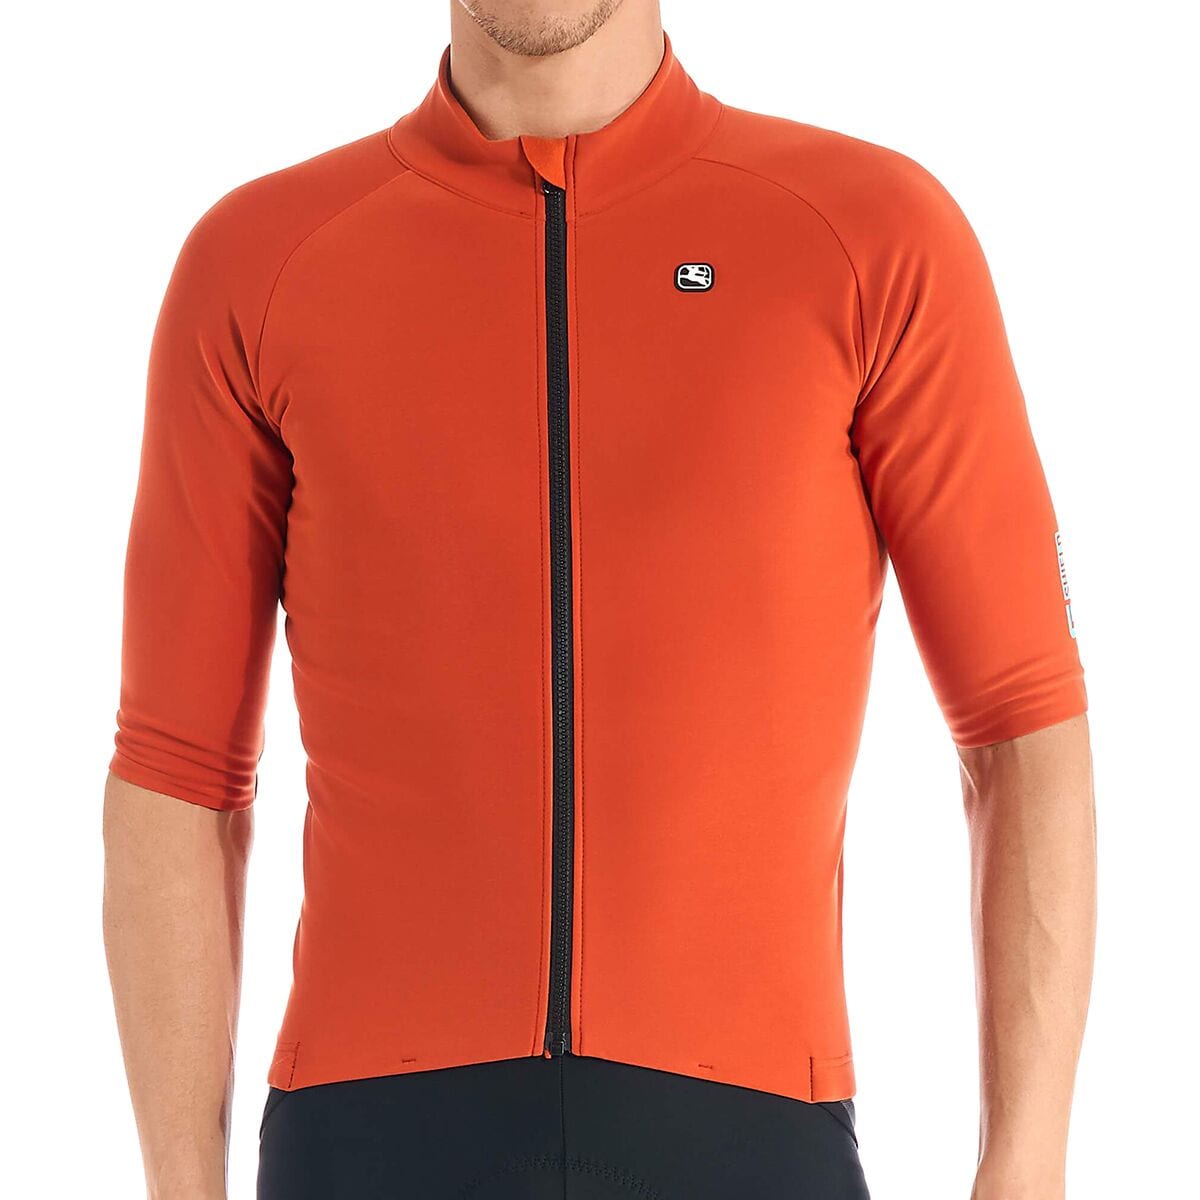 Giordana G-Shield Thermal Short-Sleeve Jersey - Men's Orange, XXL